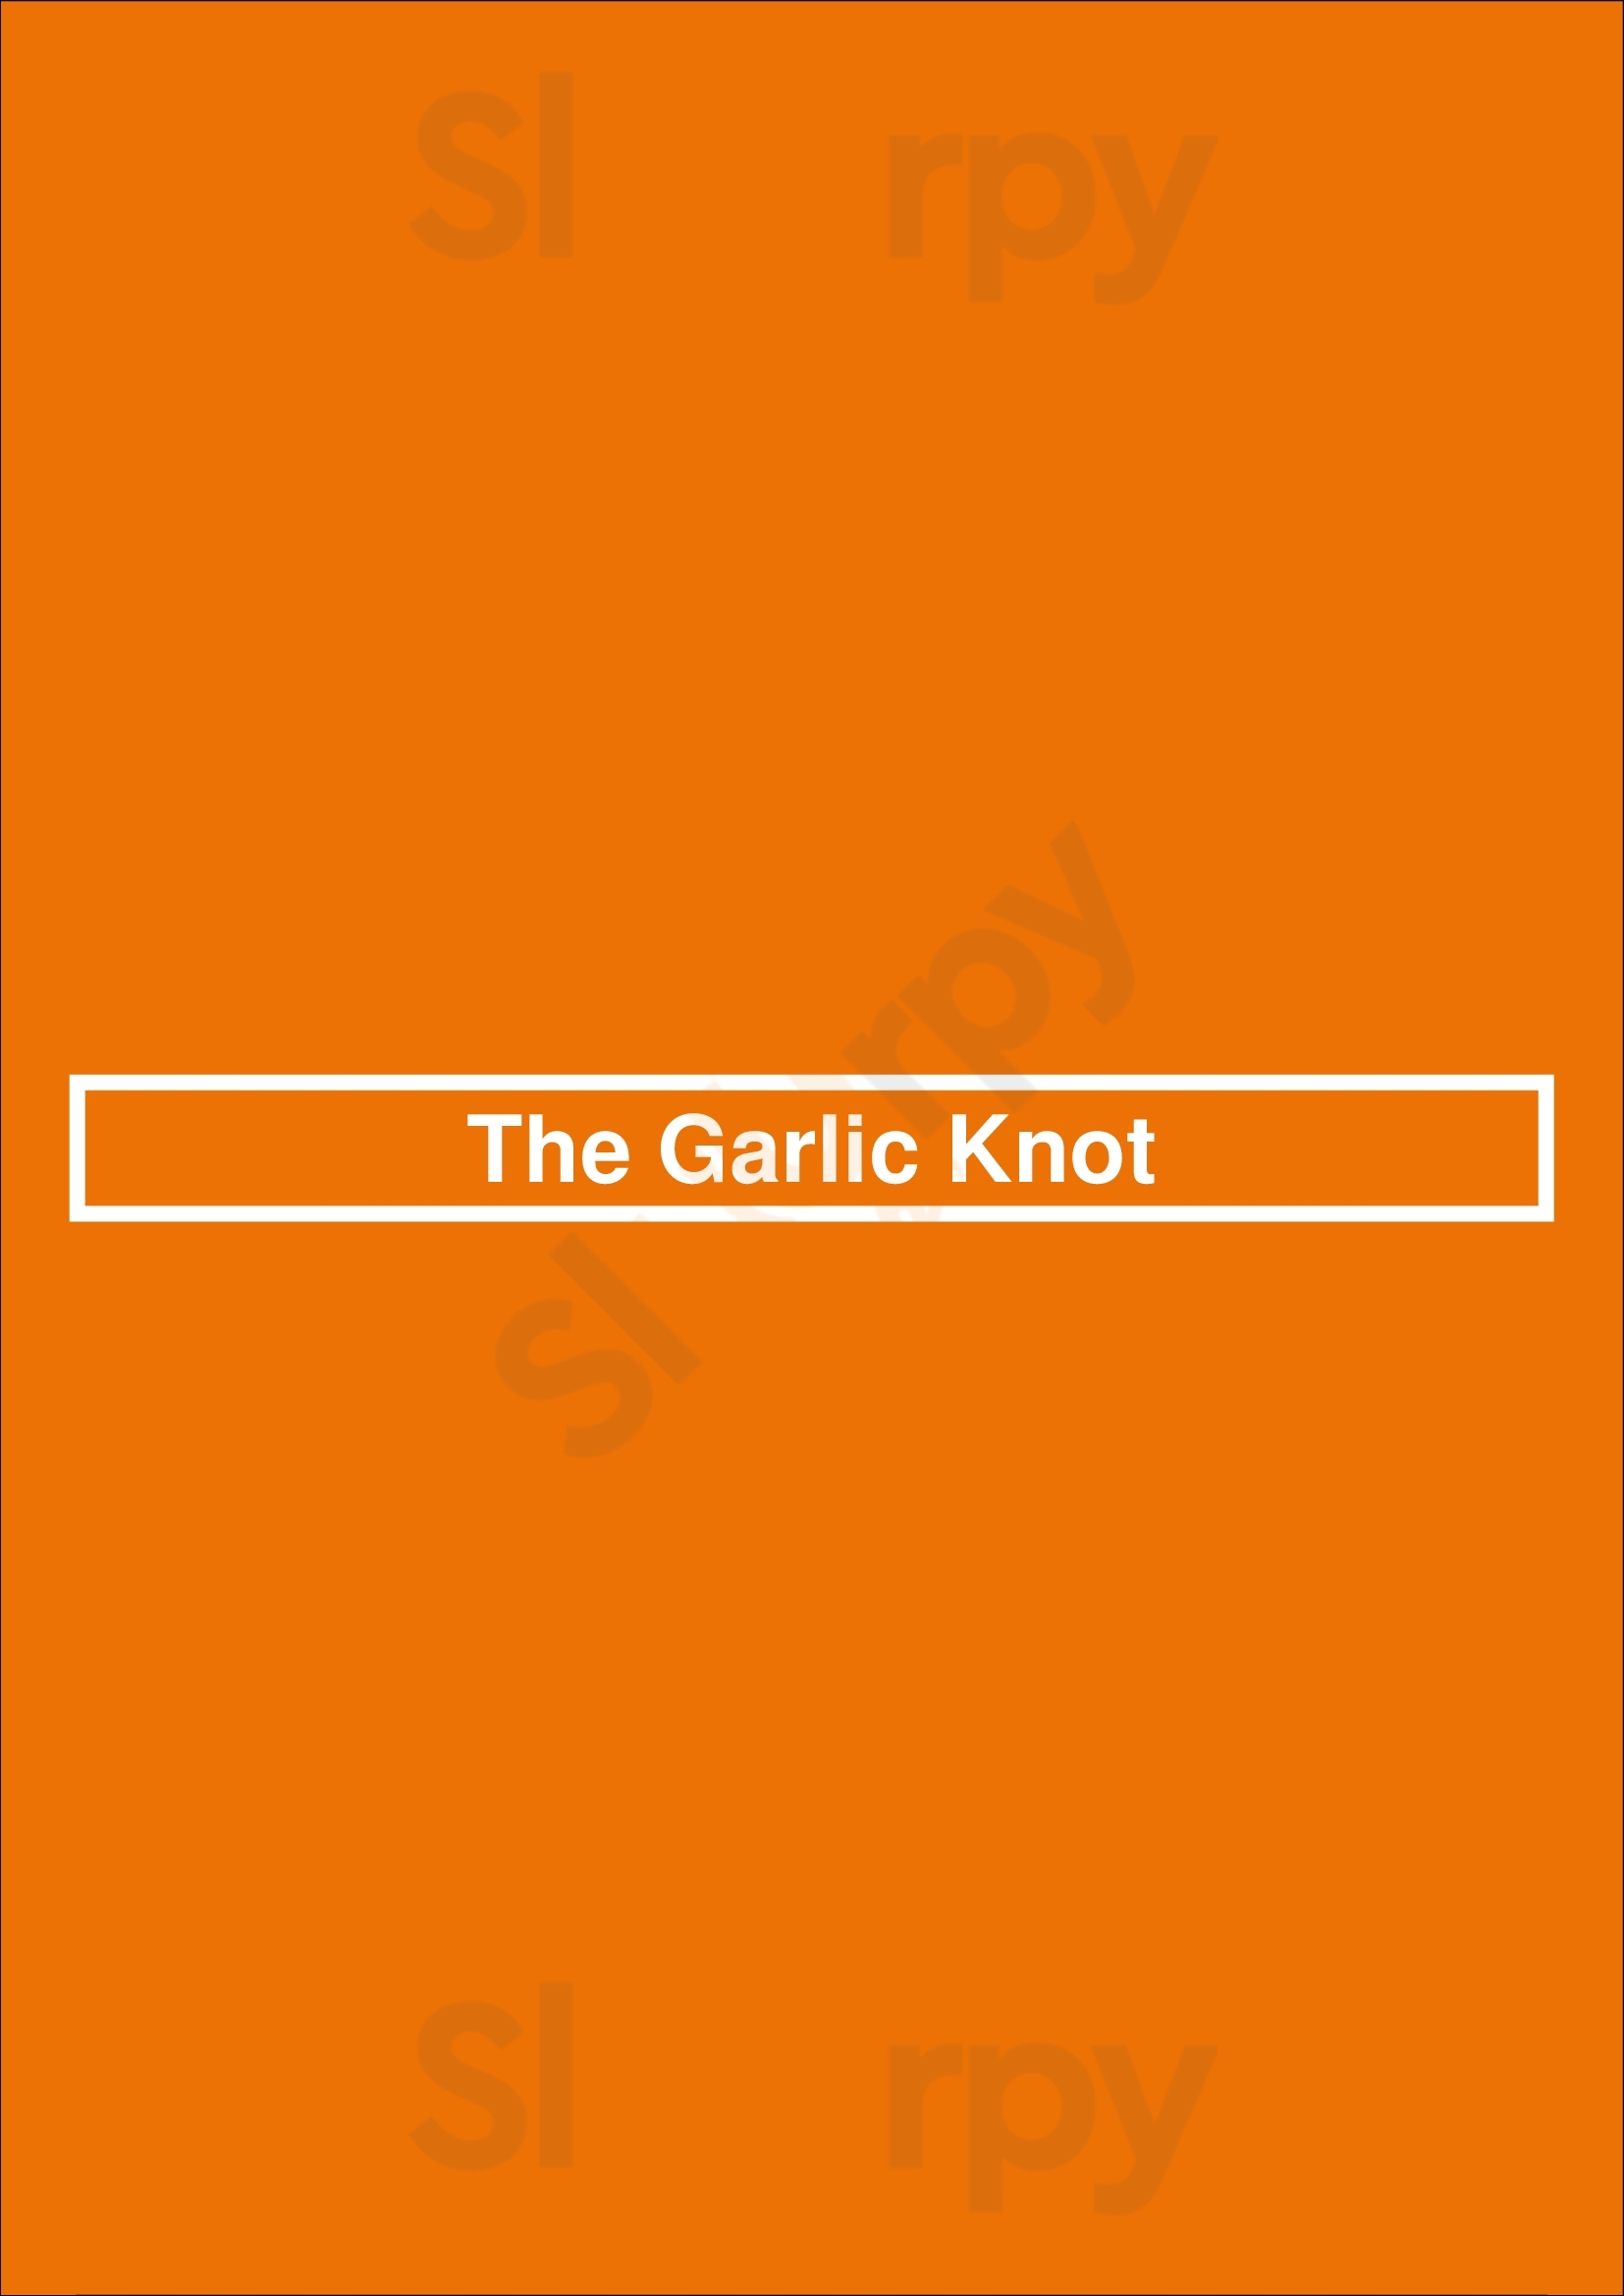 The Garlic Knot Fort Collins Menu - 1